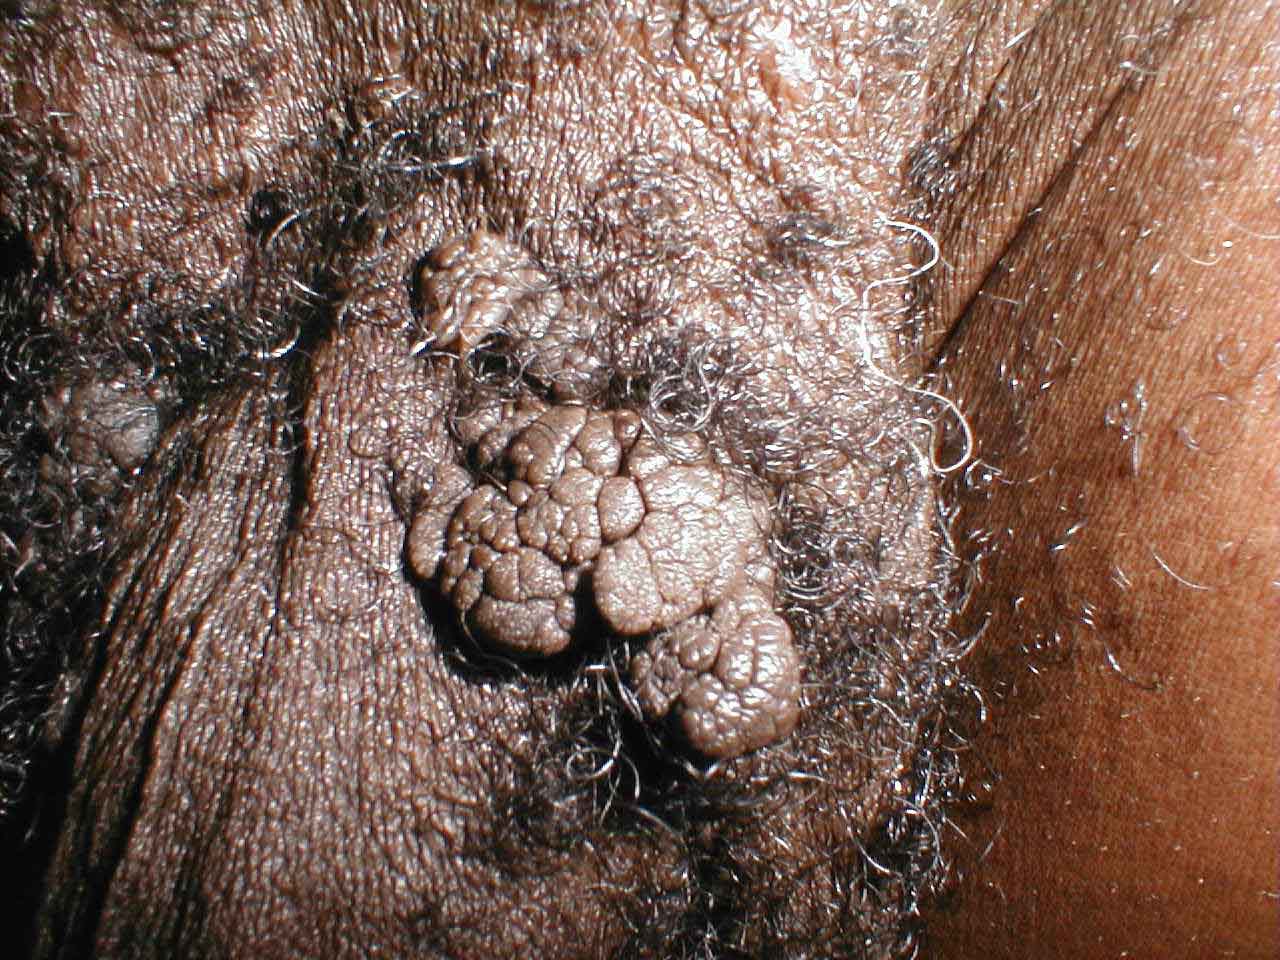 Extensive Penile Condyloma Acuminata